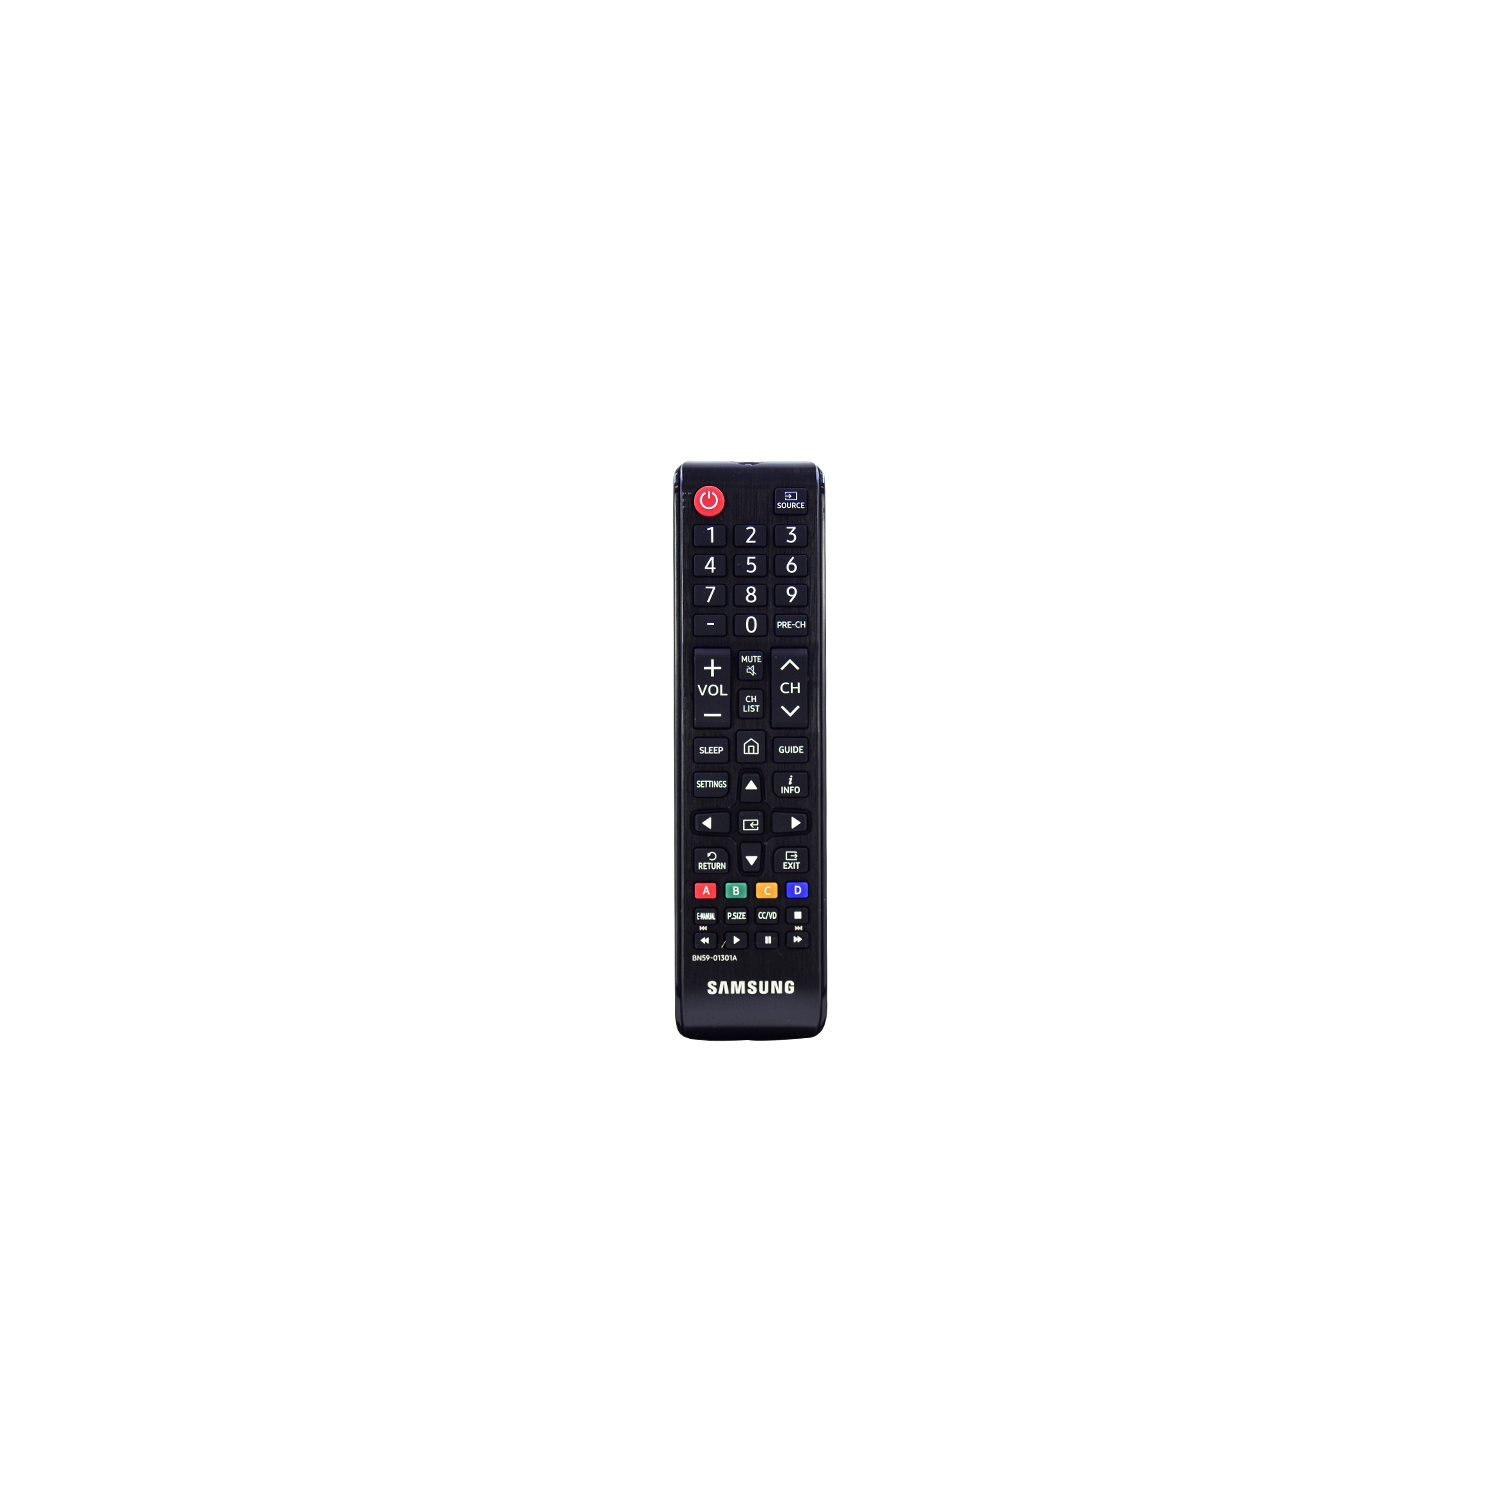 Samsung Smart TV Universal Remote Control (BN59-01301A) - Refurbished